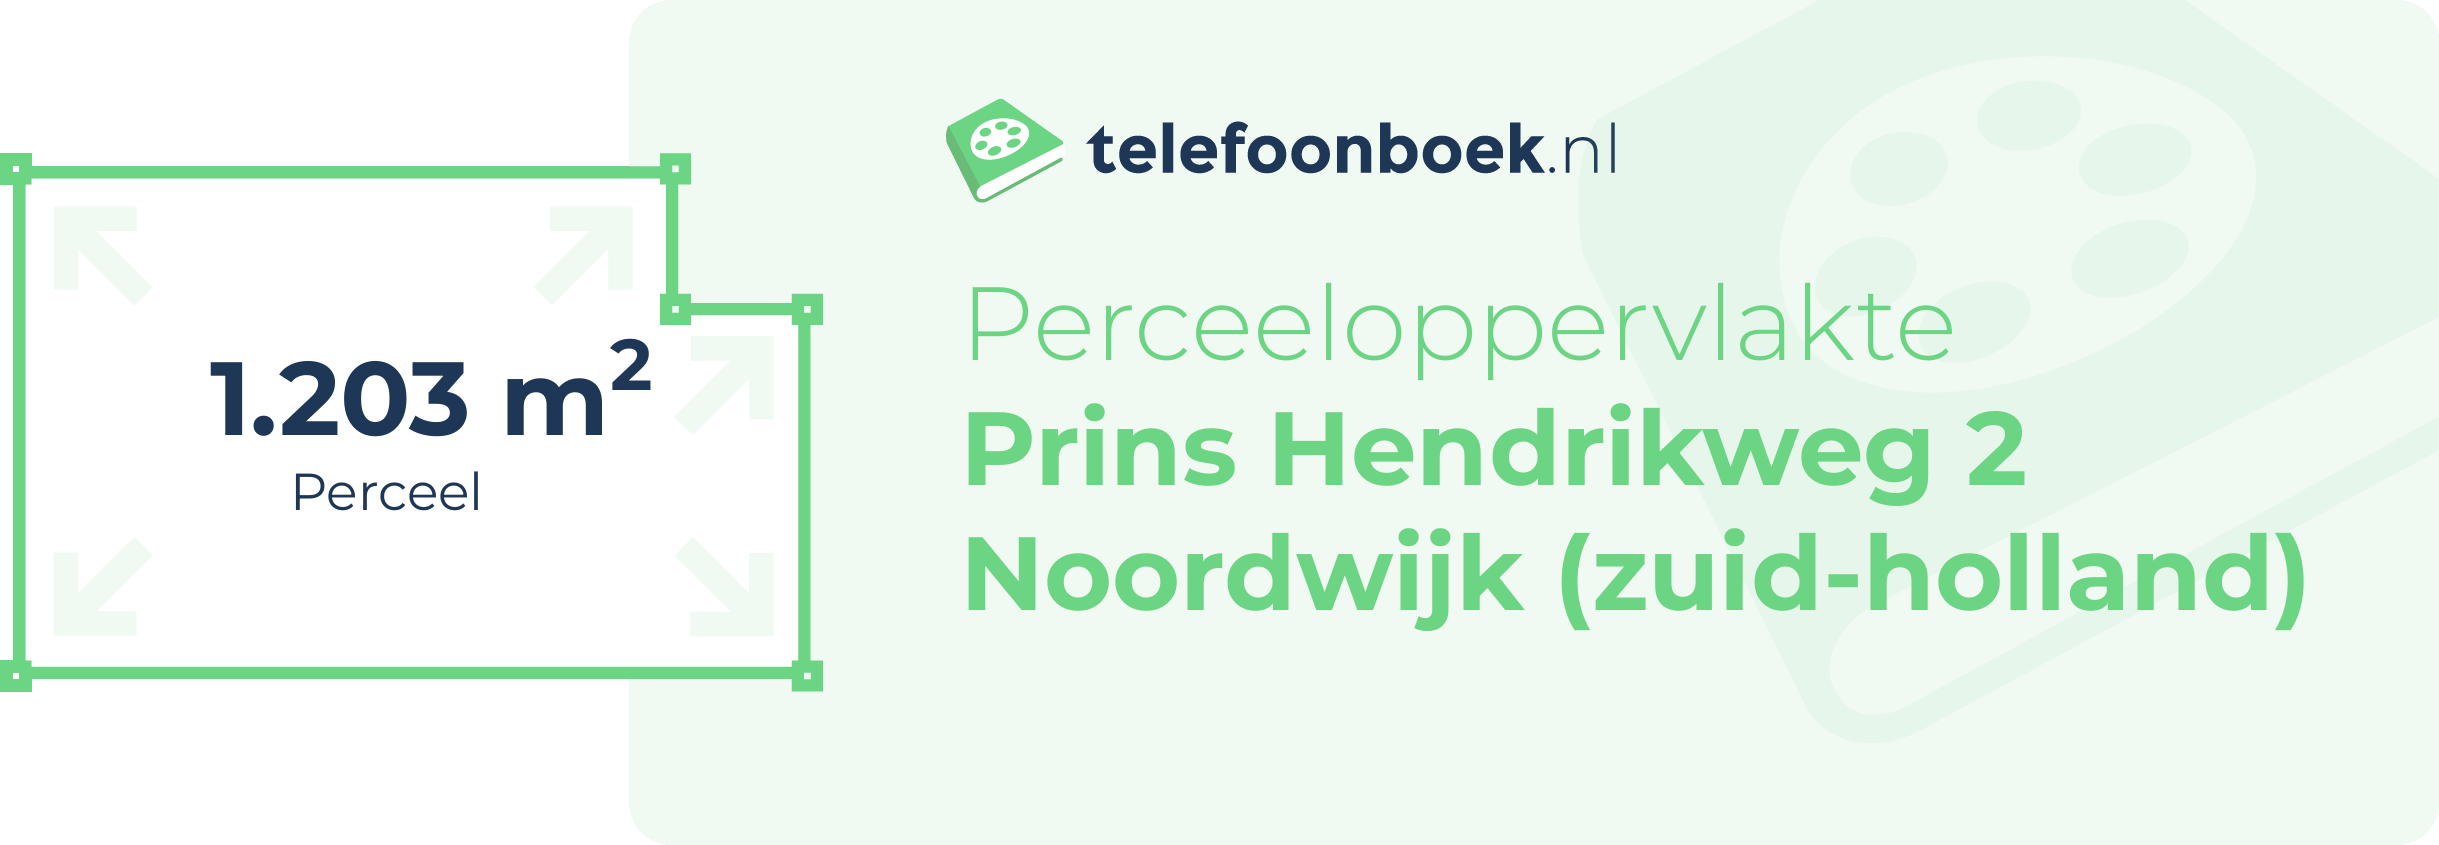 Perceeloppervlakte Prins Hendrikweg 2 Noordwijk (Zuid-Holland)